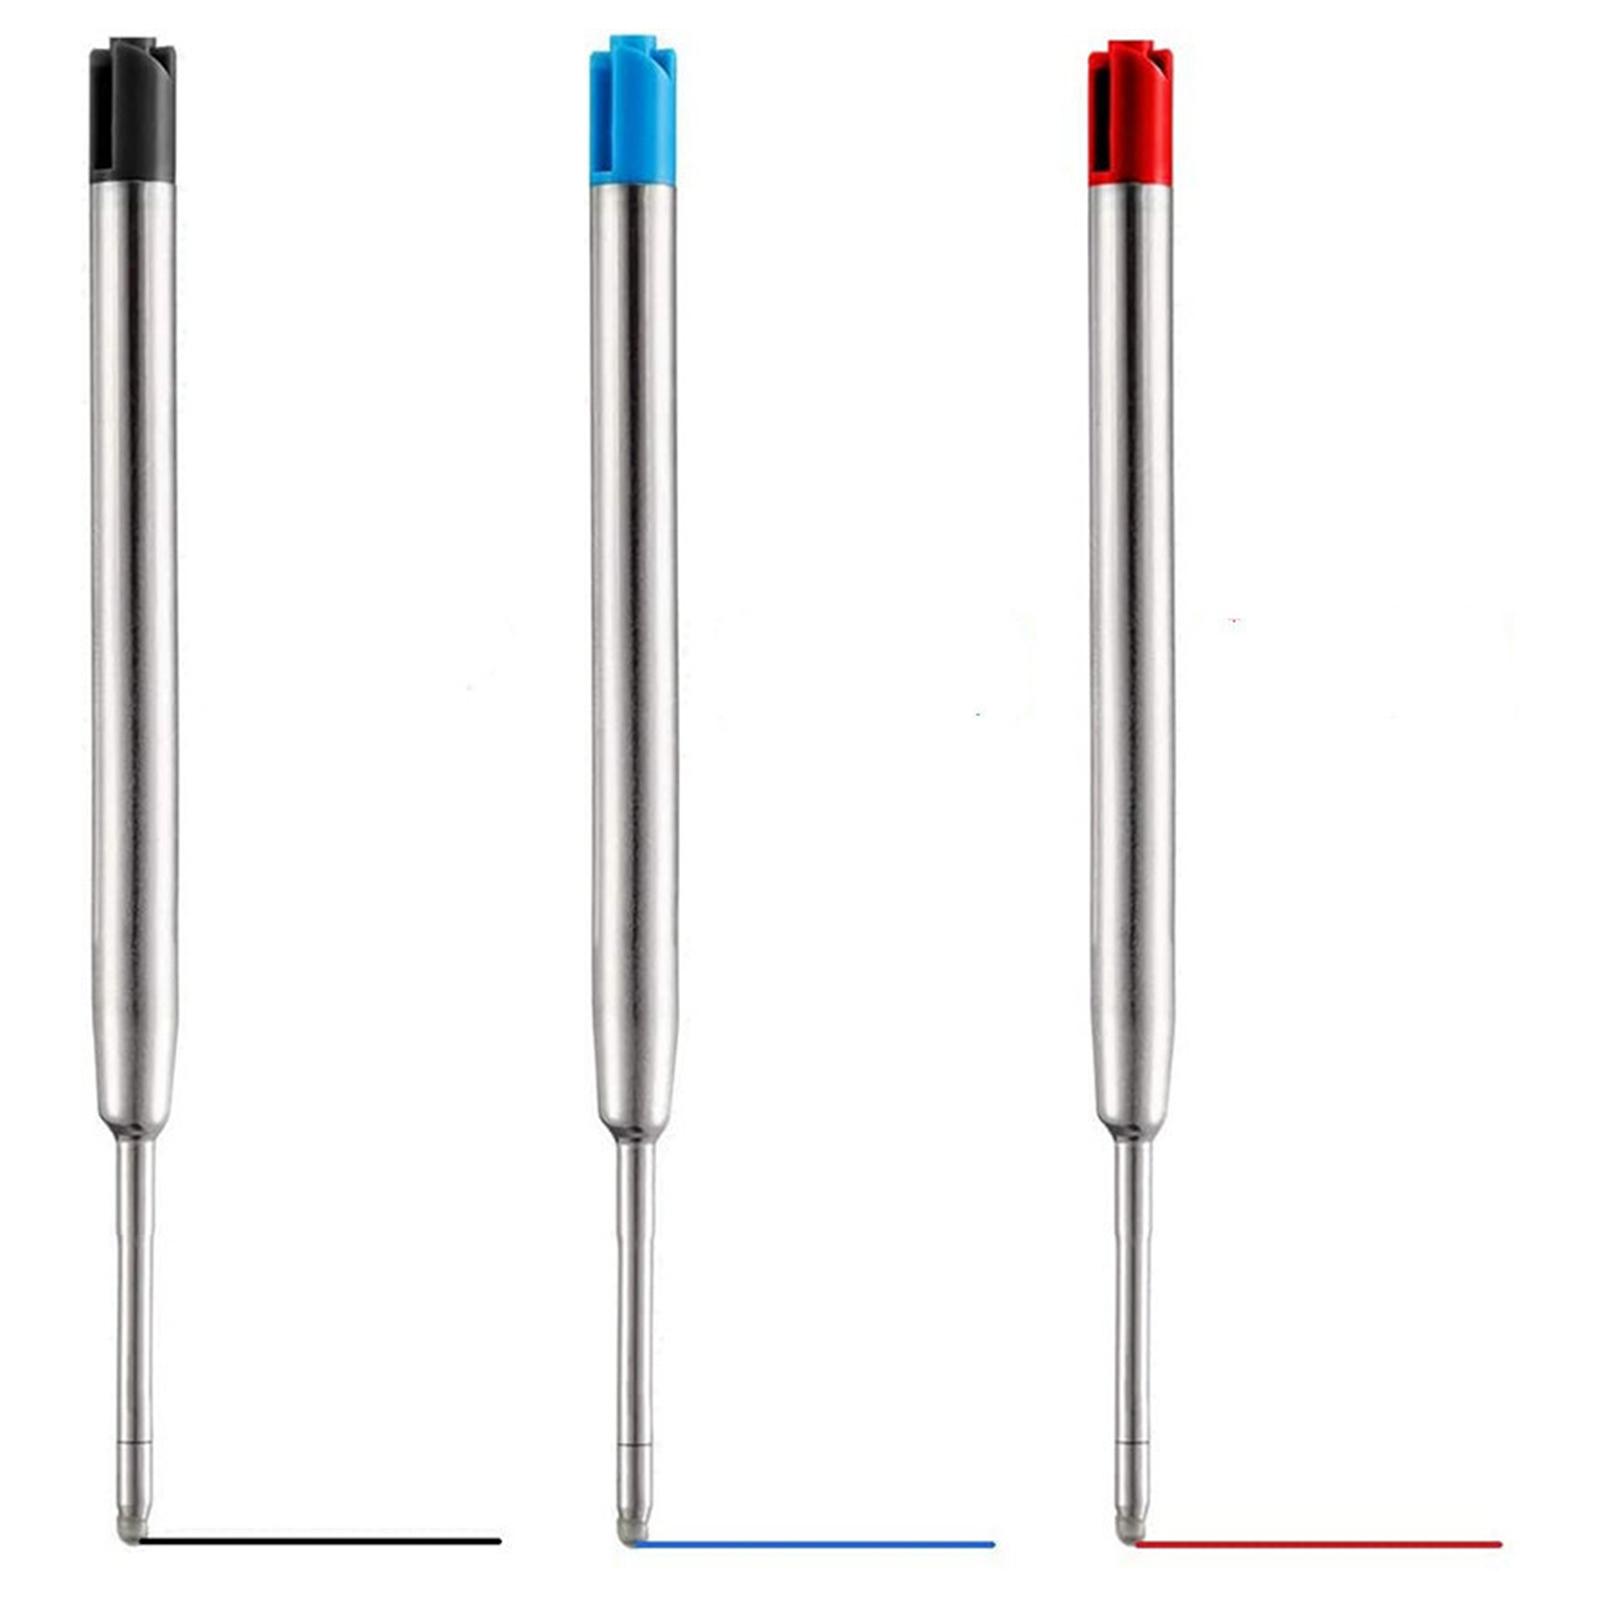 24x Ballpoint Pen Refills Large Capacity Office G2 Ink Pen Replace Supplies